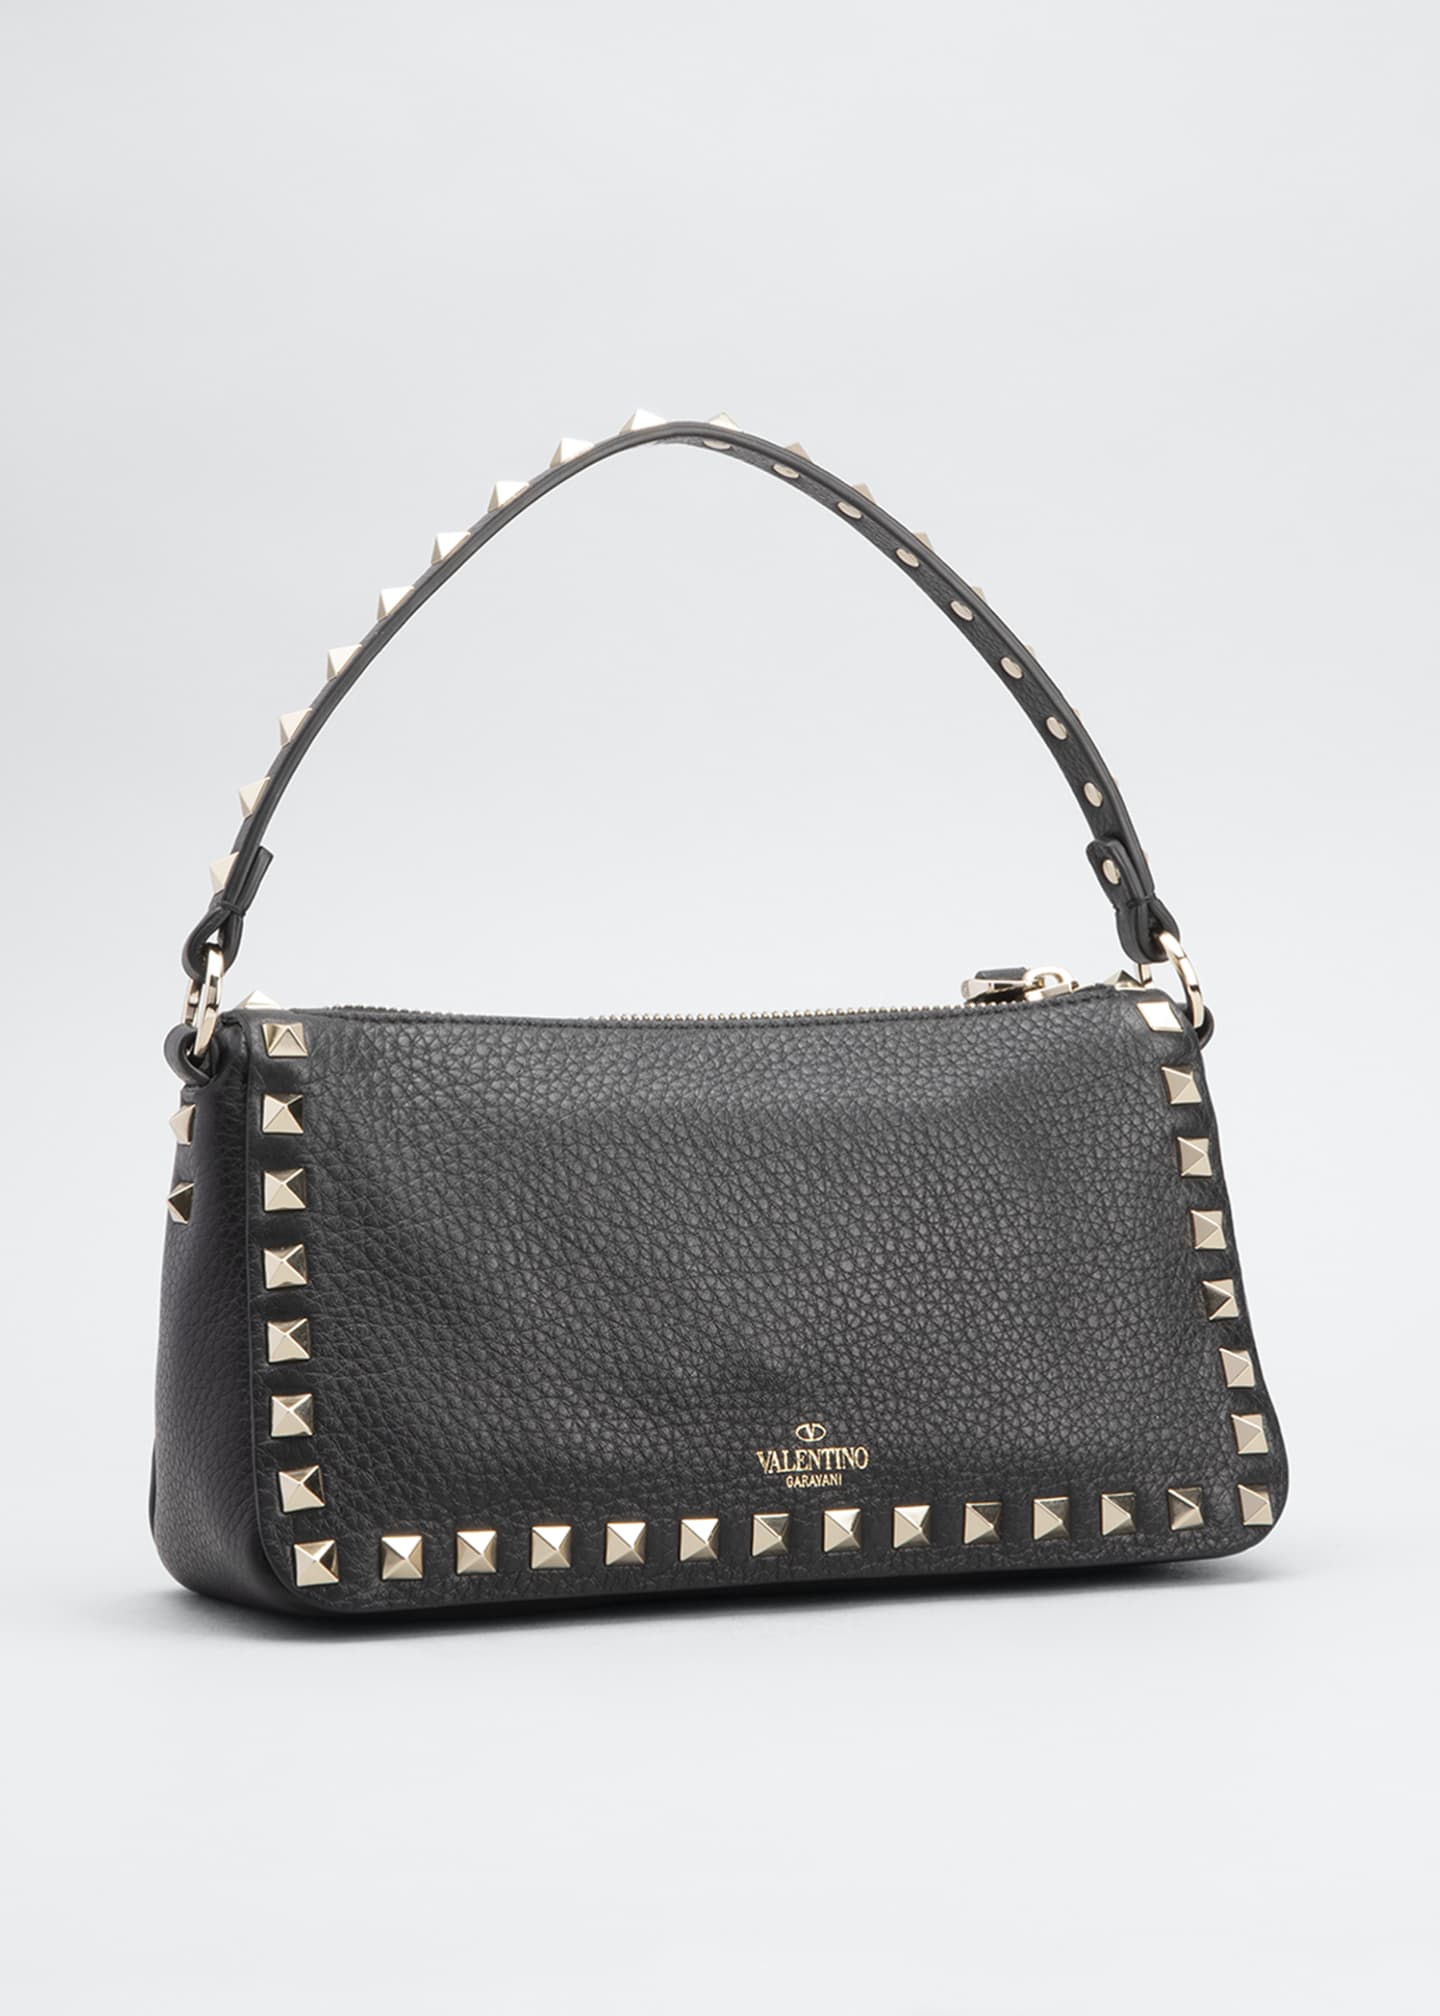 Valentino Garavani Rockstud Small Leather Shoulder Bag - Bergdorf Goodman